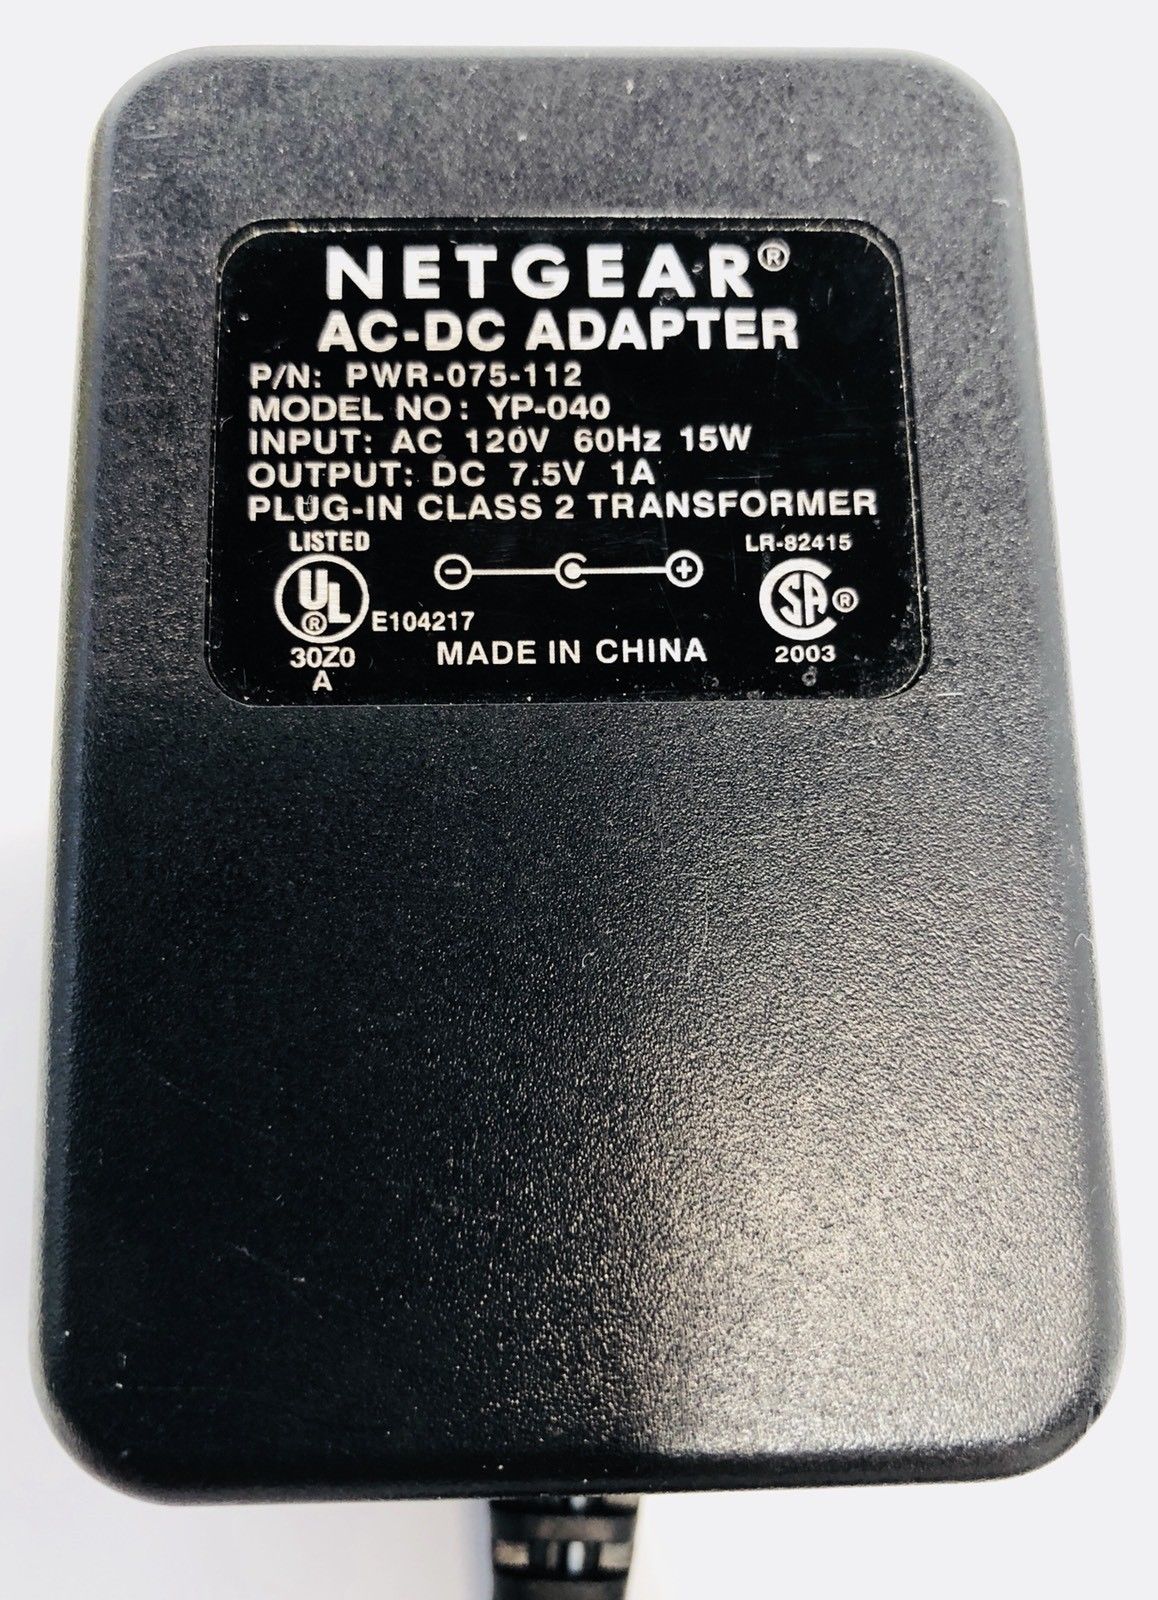 New Netgear YP-040 PWR-075-112 7.5V 1A AC DC Adapter Class 2 Transformer power supply